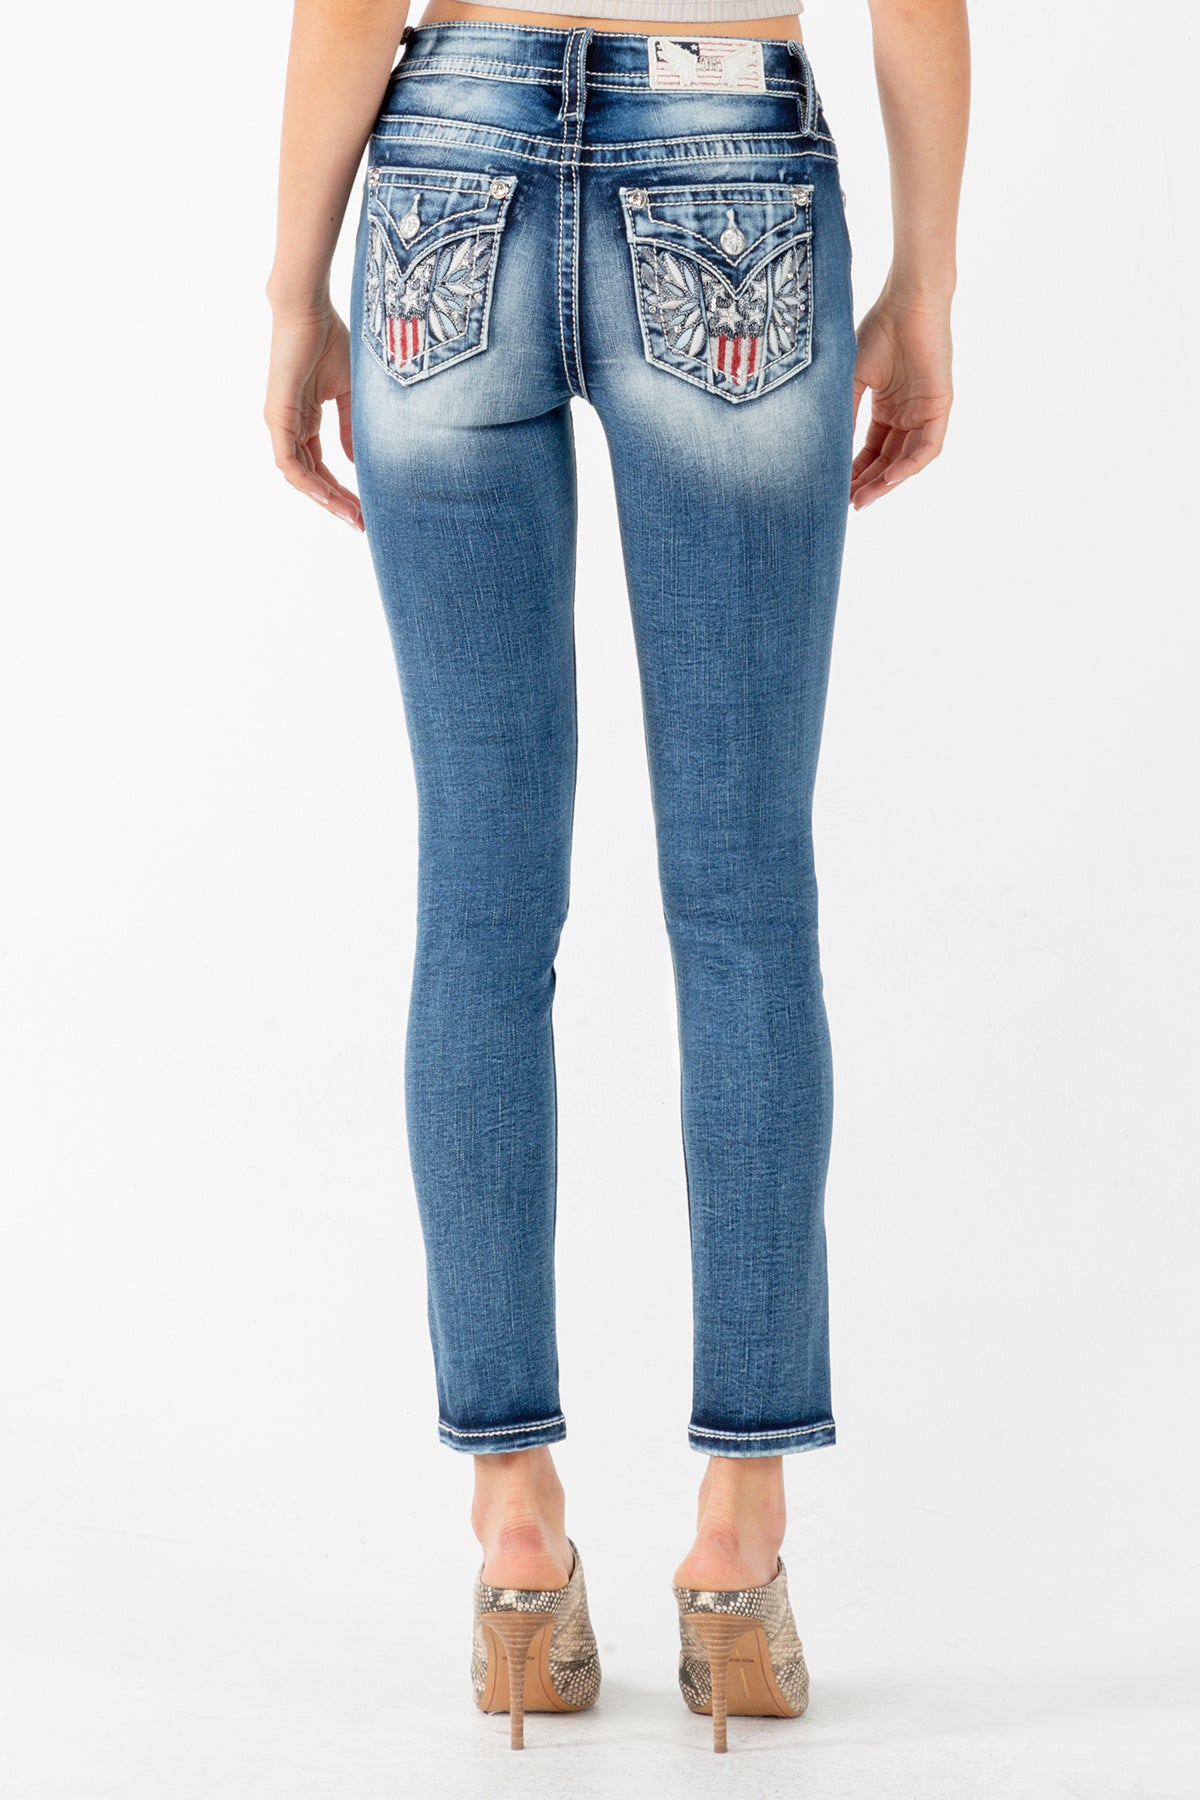 K1218 Mid-Rise Jeans